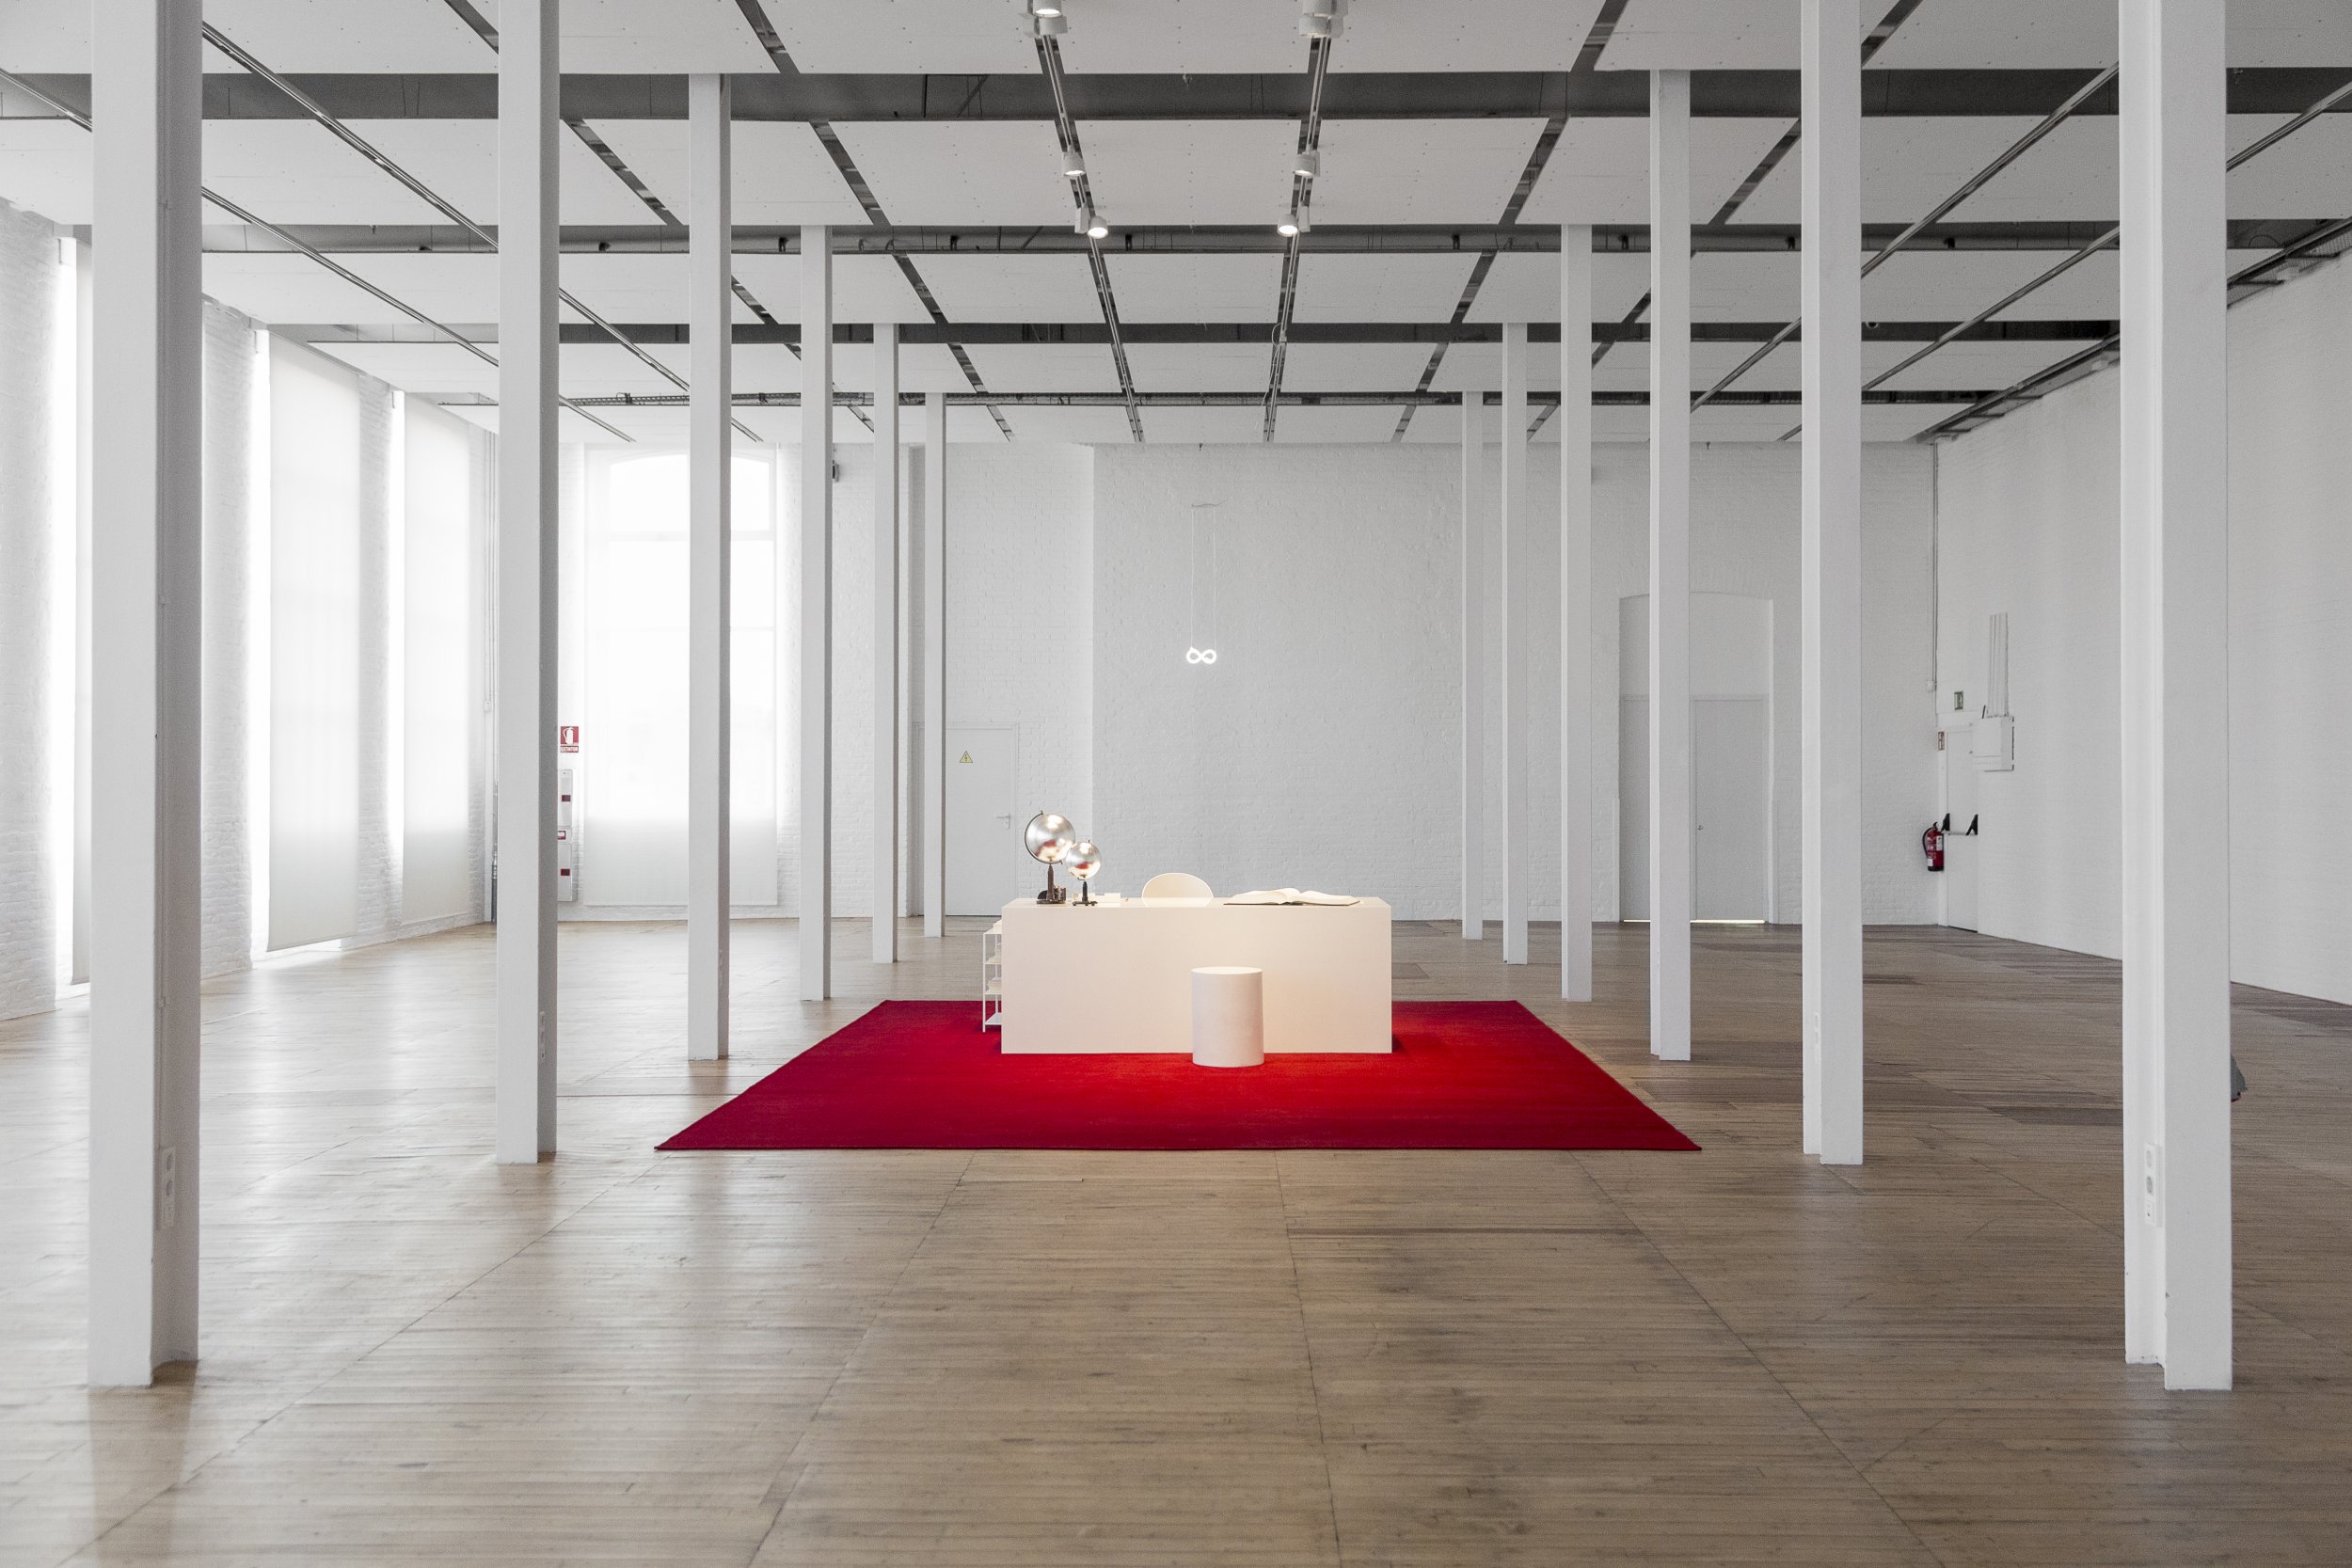 Exhibition view: The Infinite Library, Daniel Gustav Cramer and Haris Epaminonda, Fabra i Coats | Centre d’Art Contemporani de Barcelona, 2020
